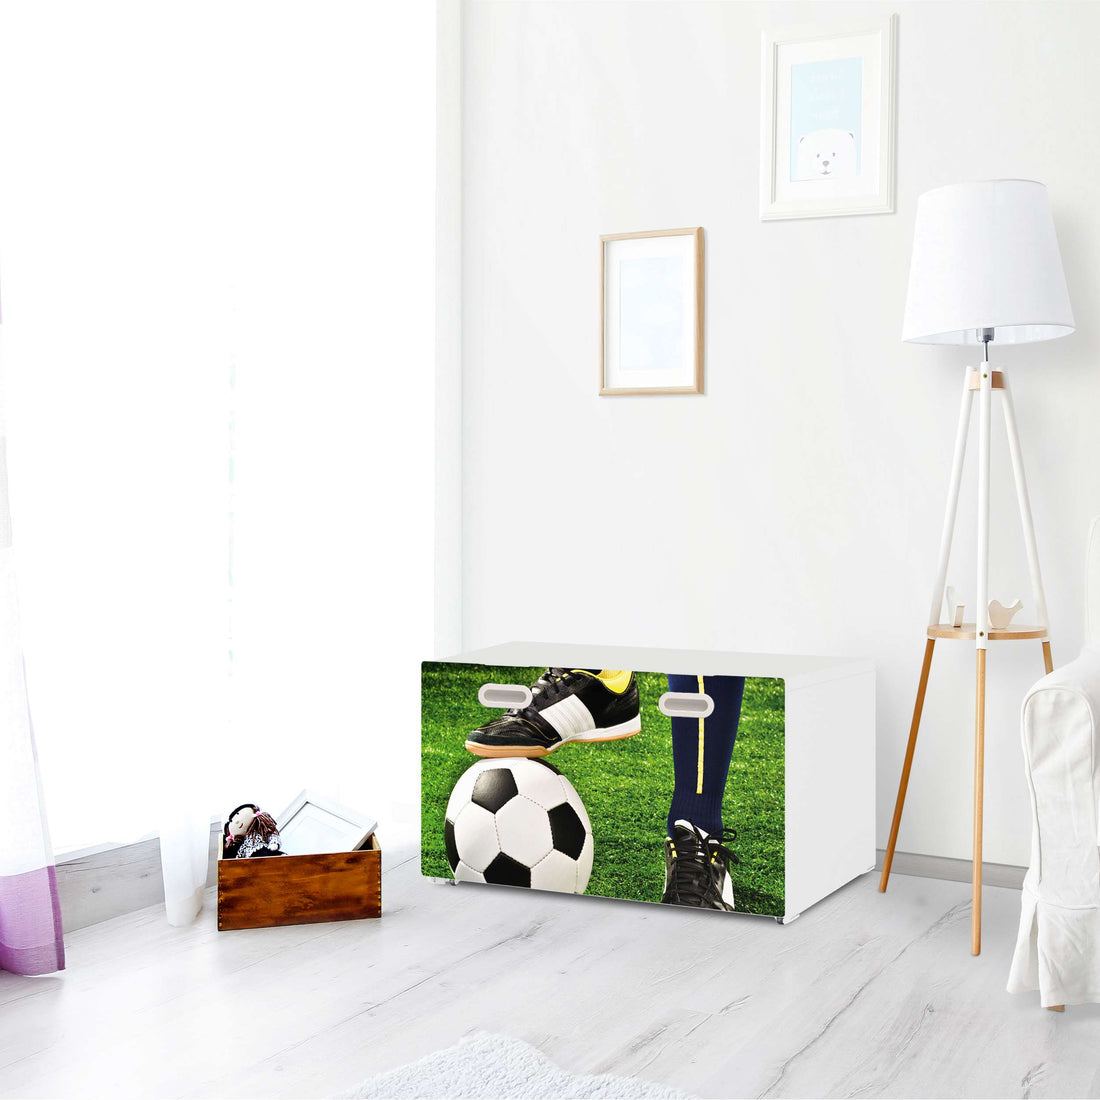 Möbelfolie Fussballstar - IKEA Stuva / Fritids Bank mit Kasten - Kinderzimmer